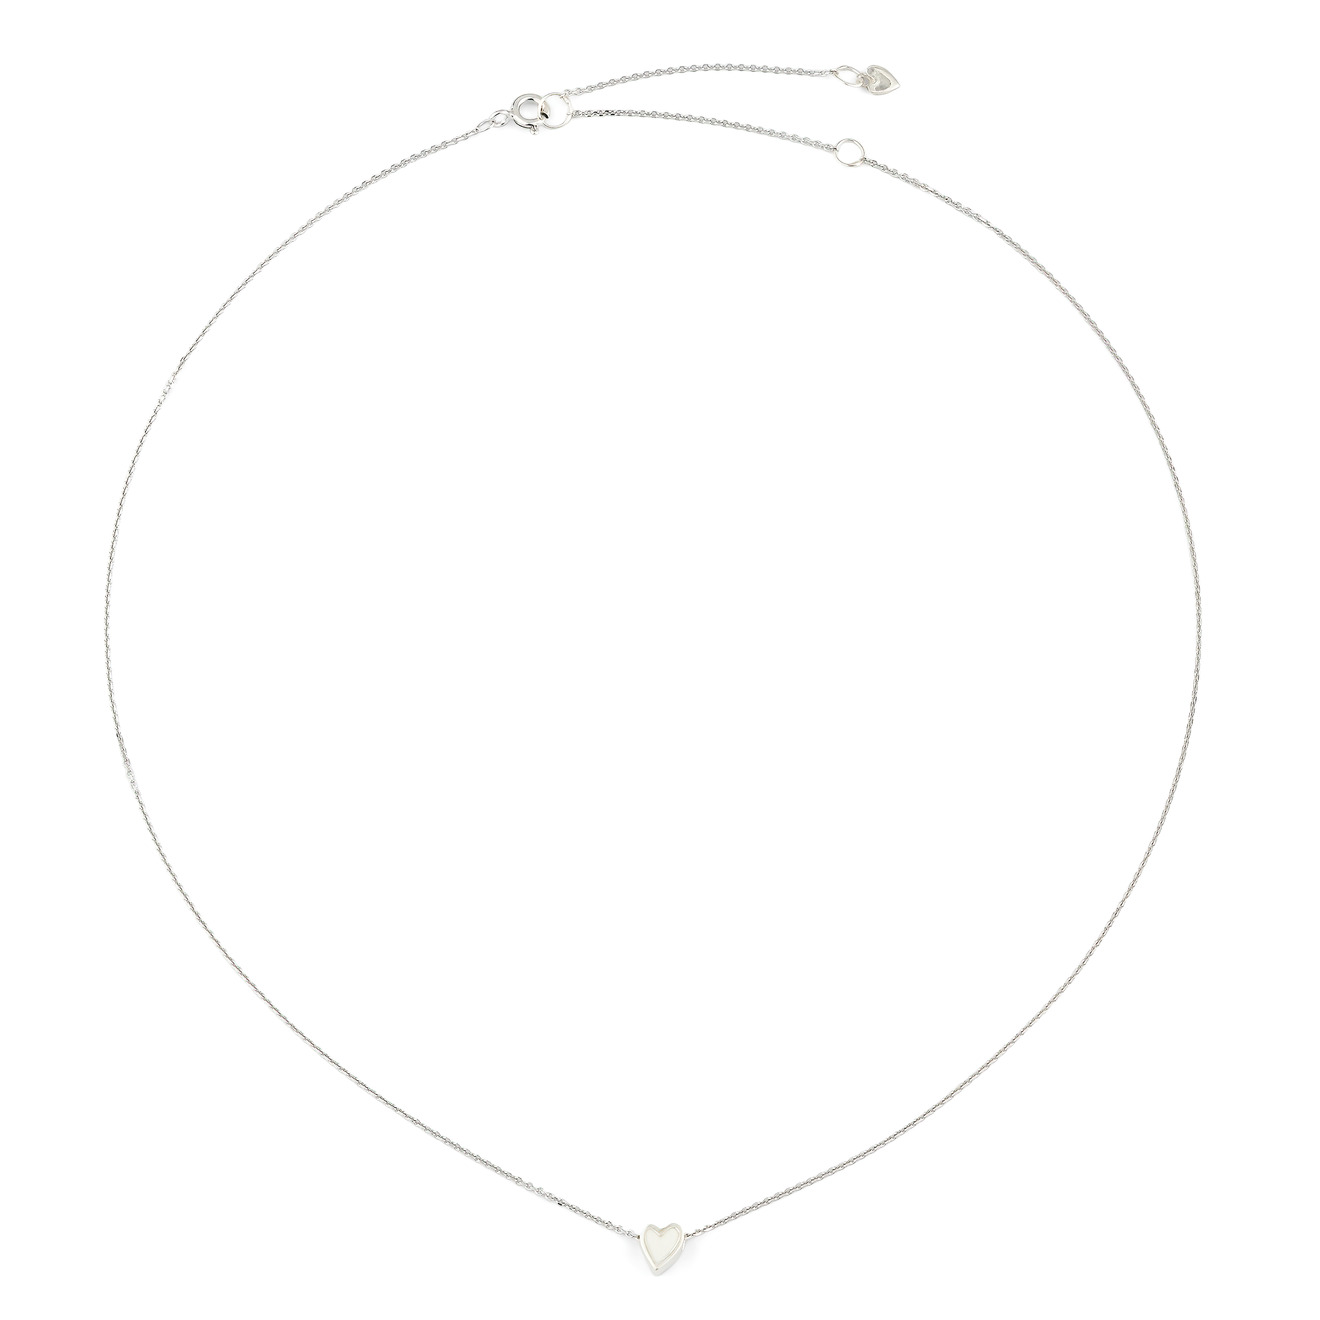 УРА jewelry Подвеска-сердце из серебра с эмалью